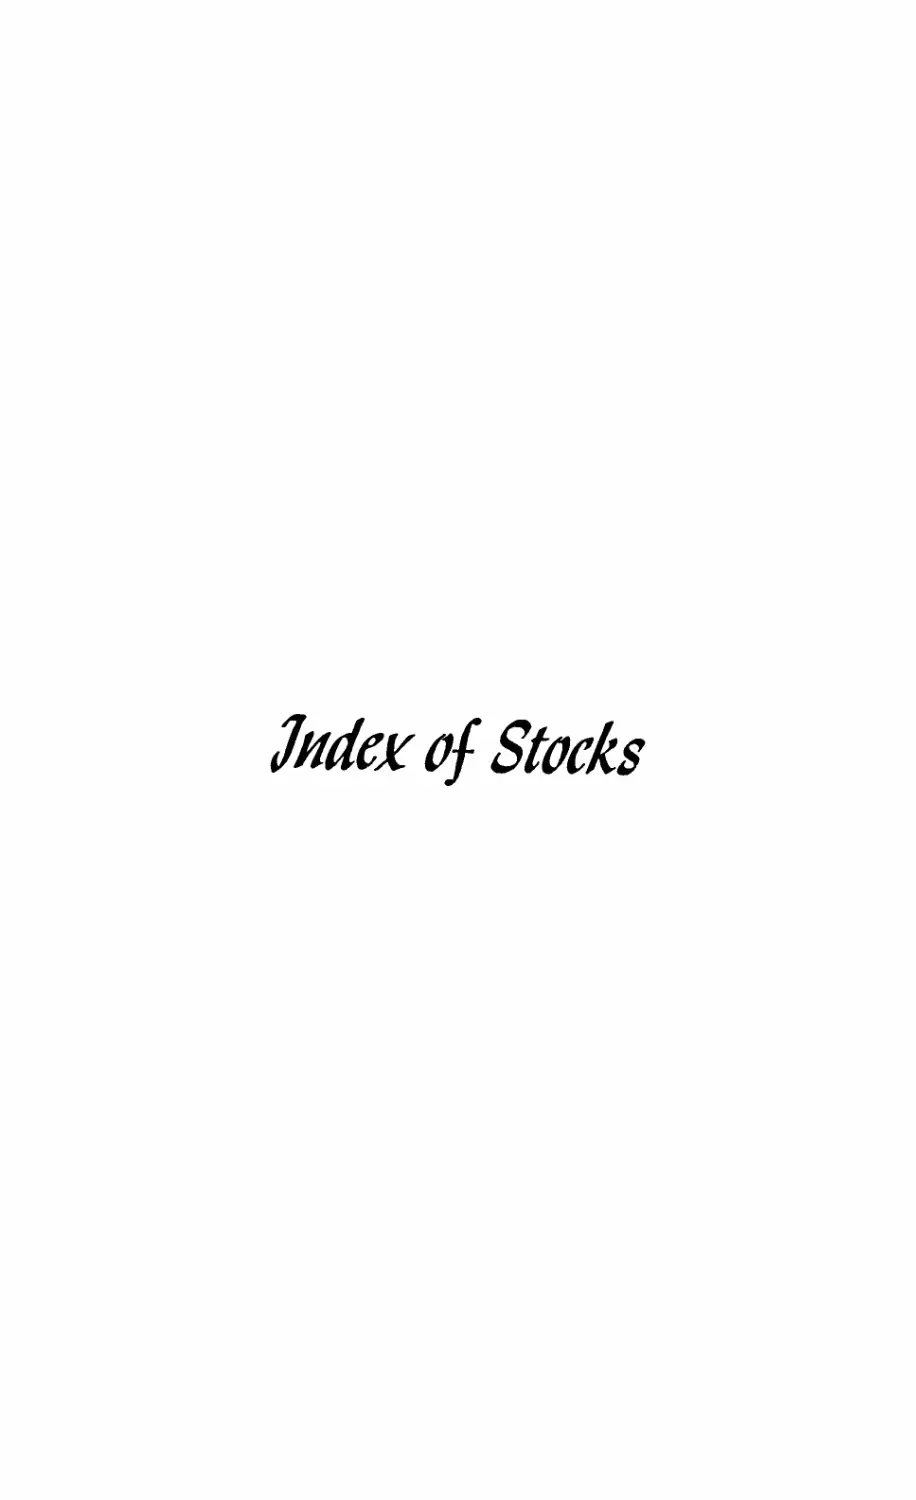 Index of Stocks